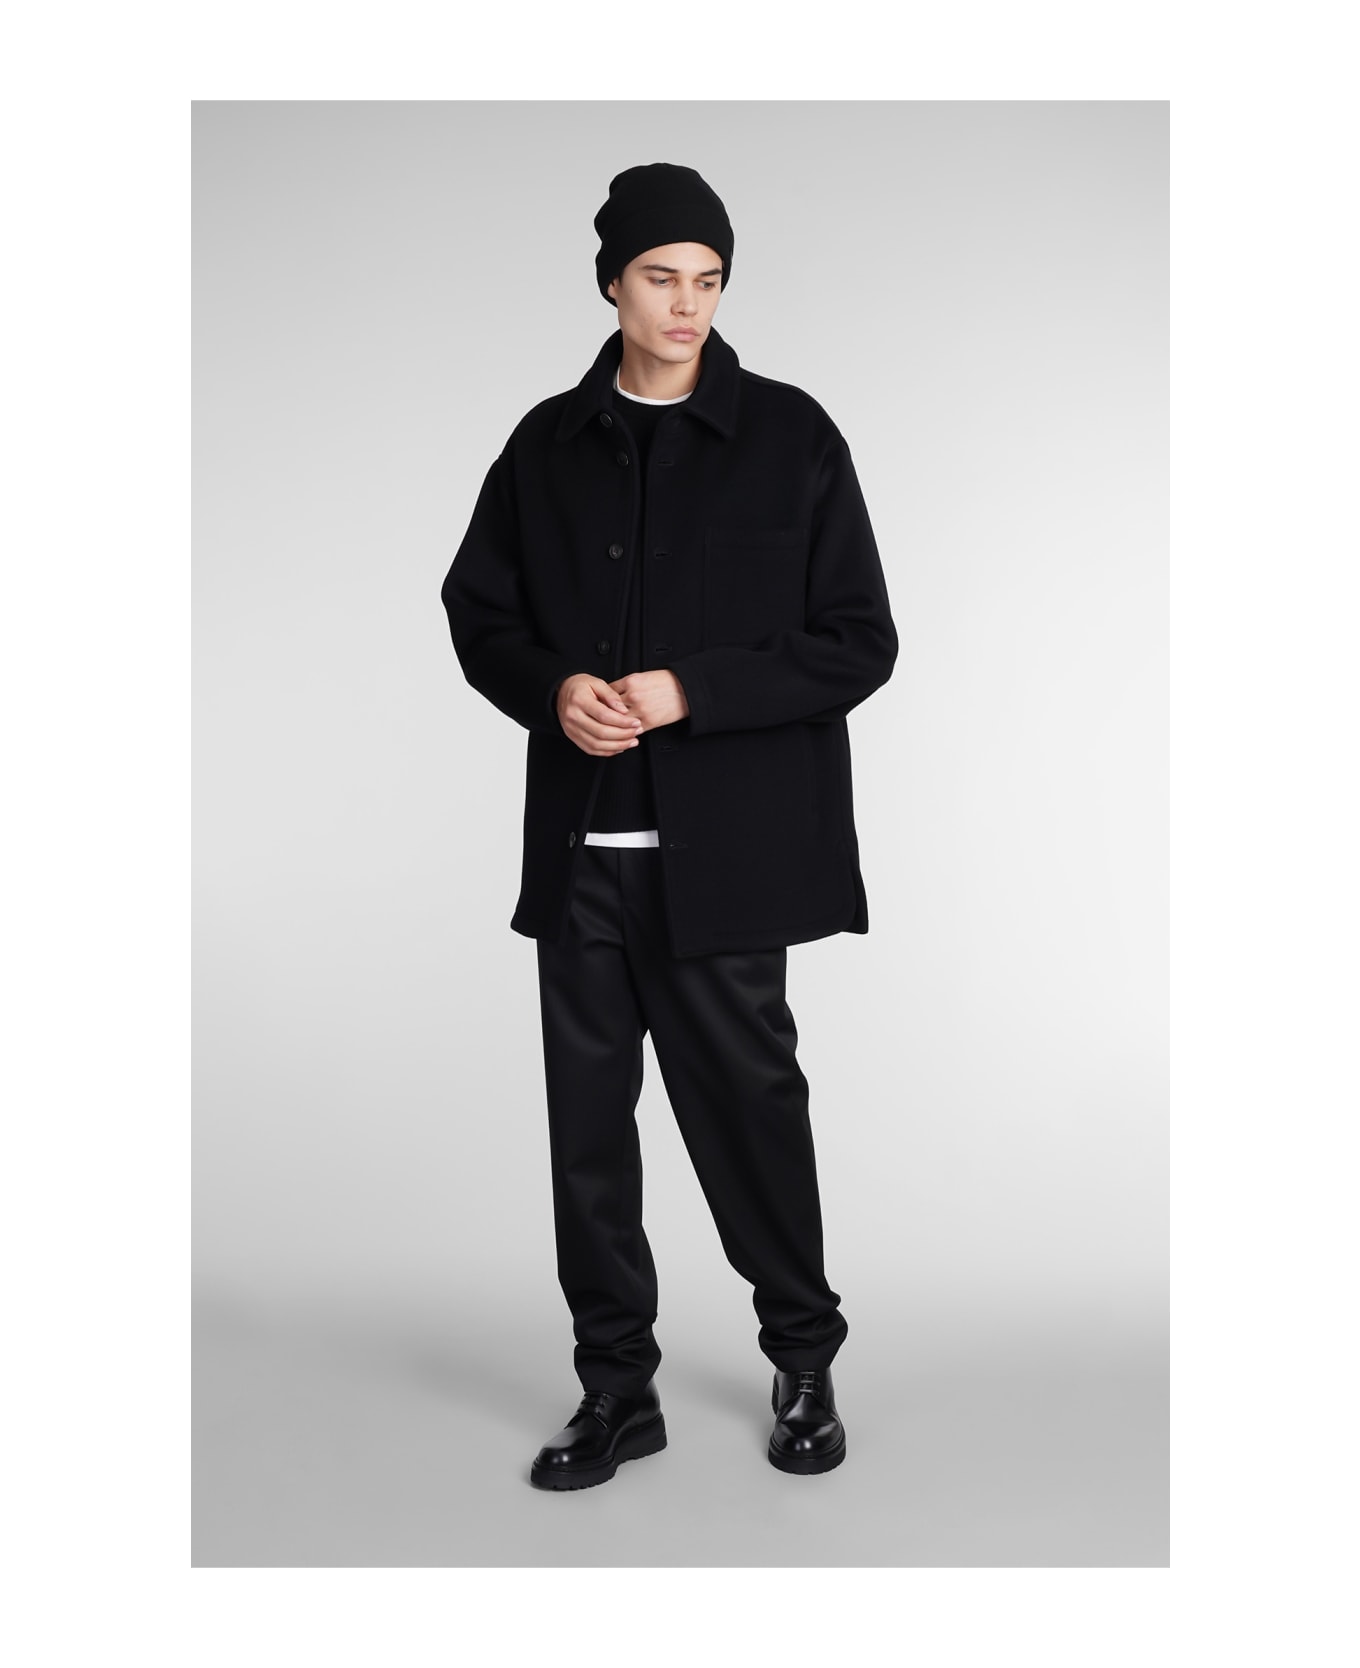 Emporio Armani Pants In Black Wool - black